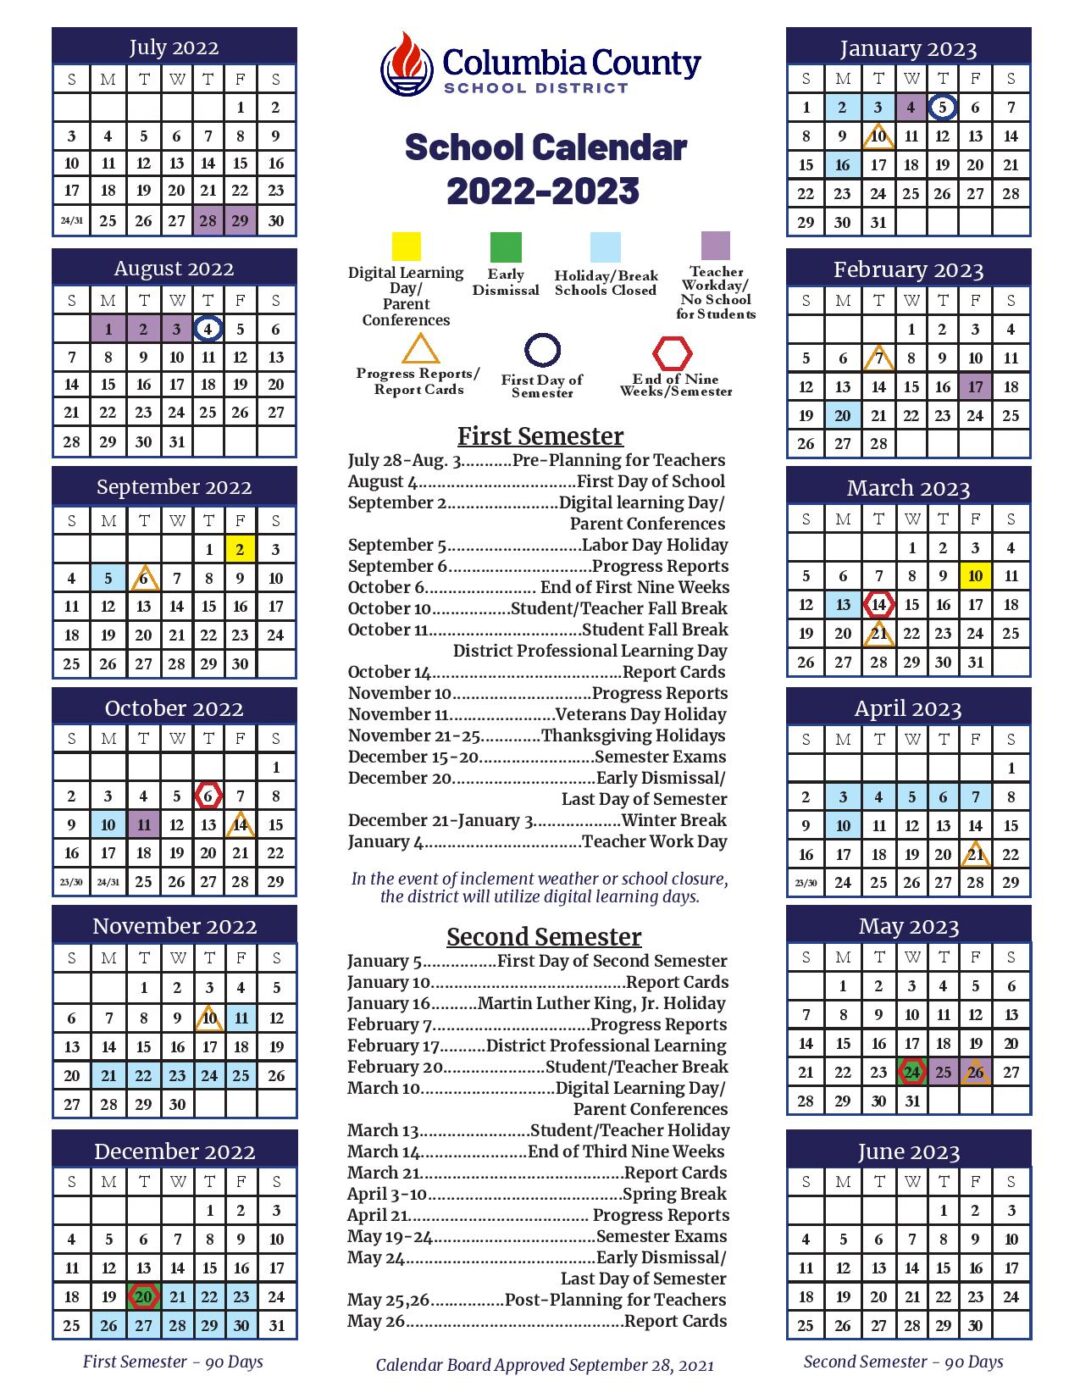 Columbia County School District Calendar 2022-2023